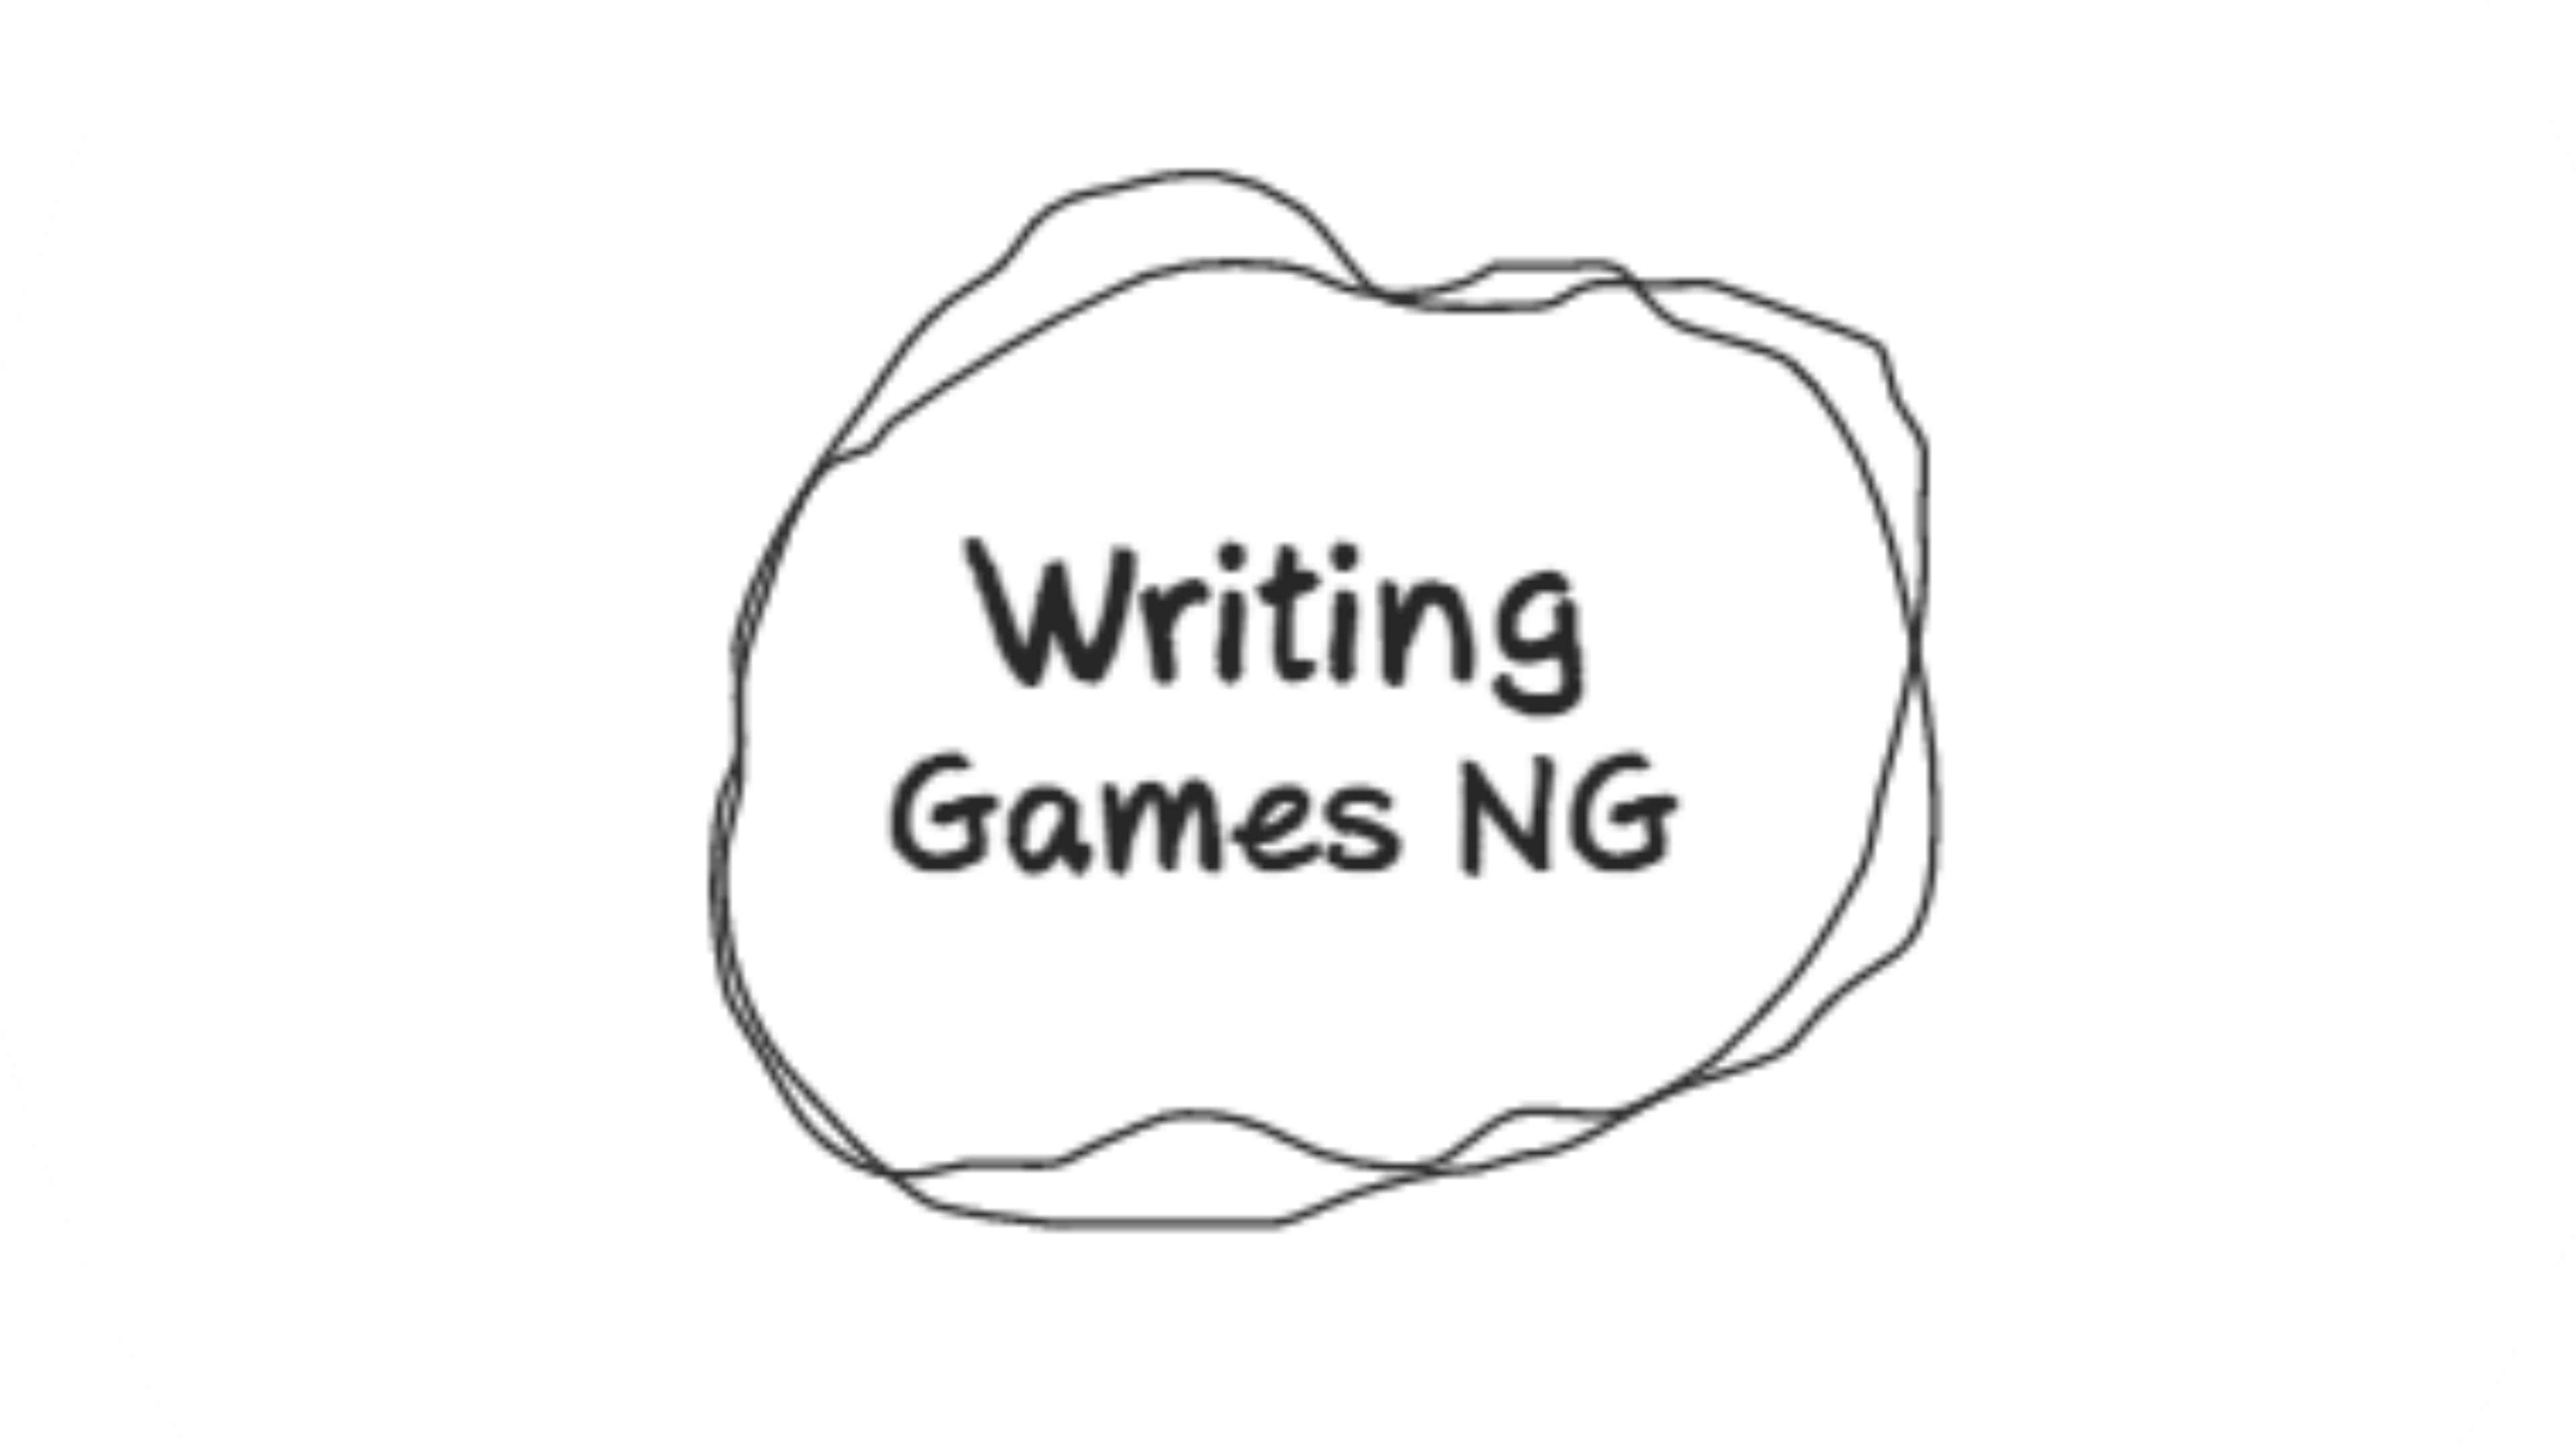 Writing Games